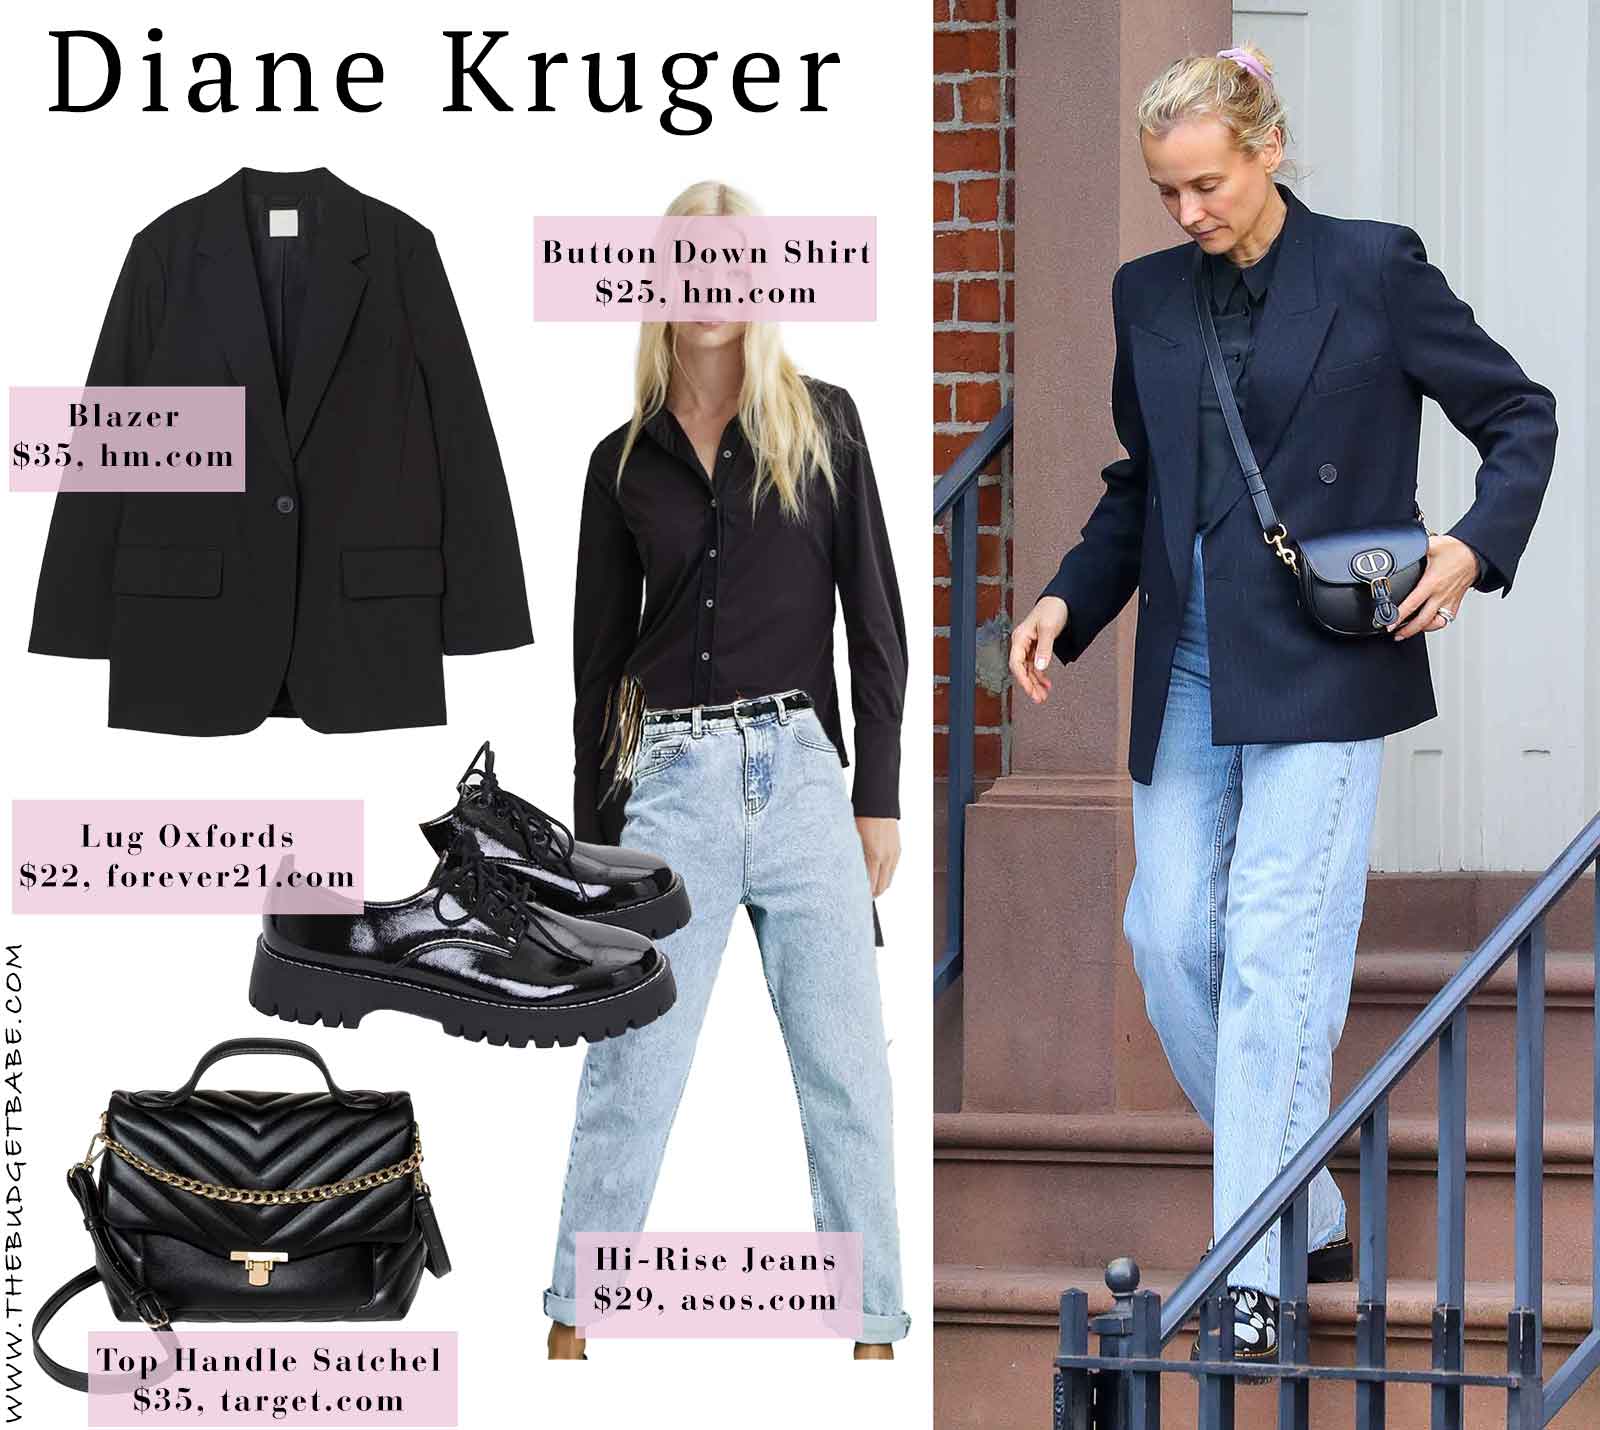 Diane Kruger's black blazer, mom jeans and lug sole Oxfords look for less